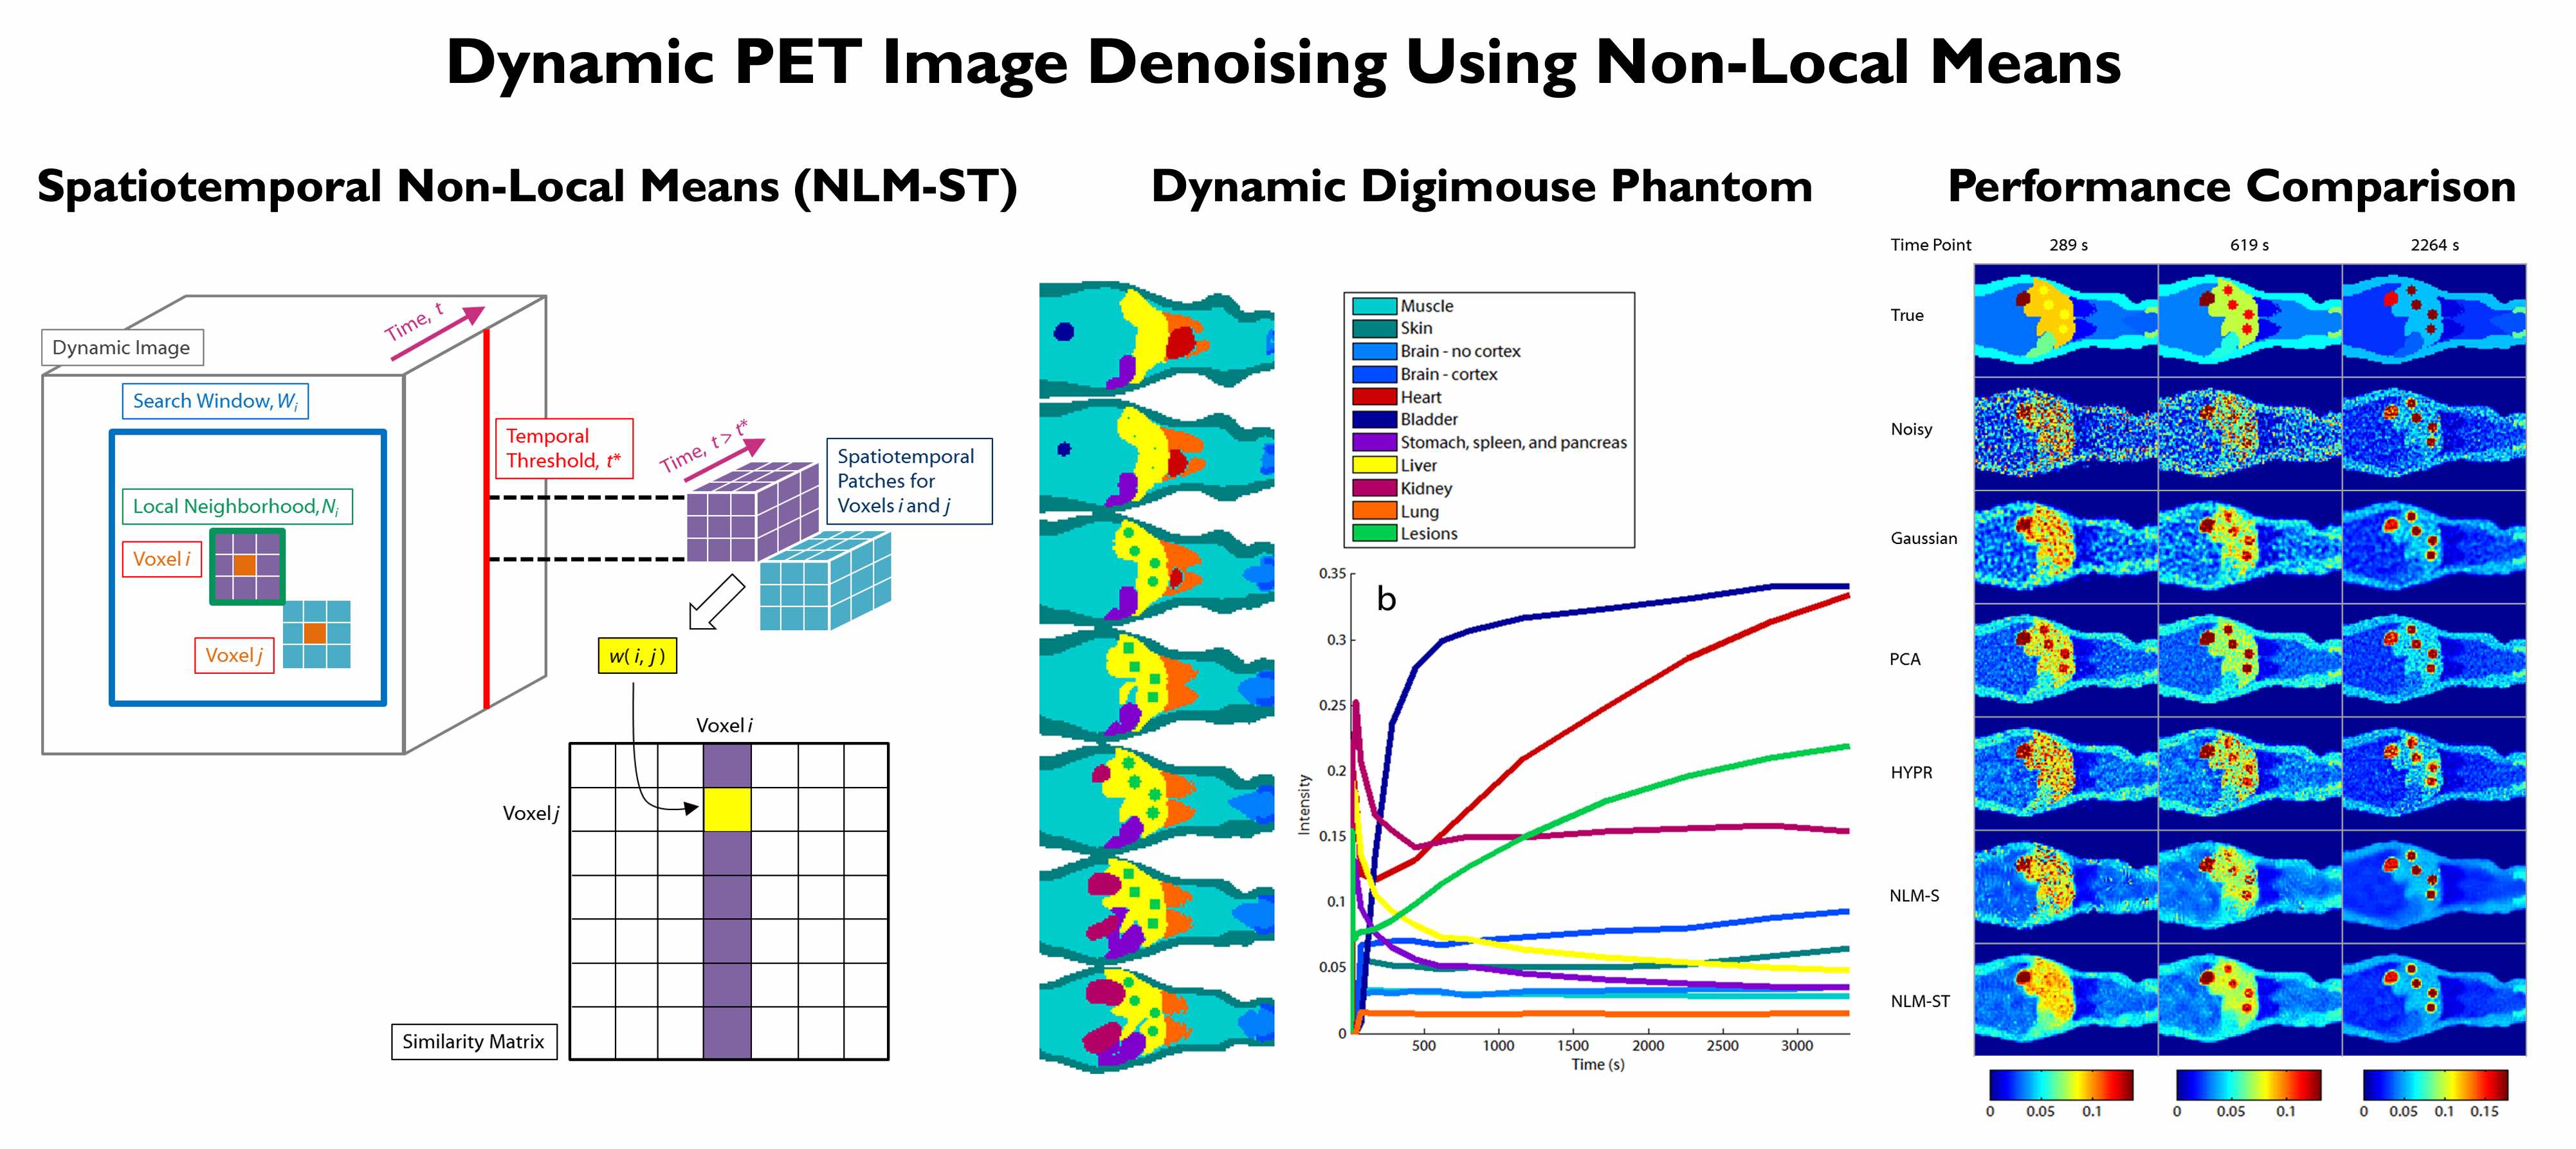 Anatomically Guided Dynamic PET Image Denoising